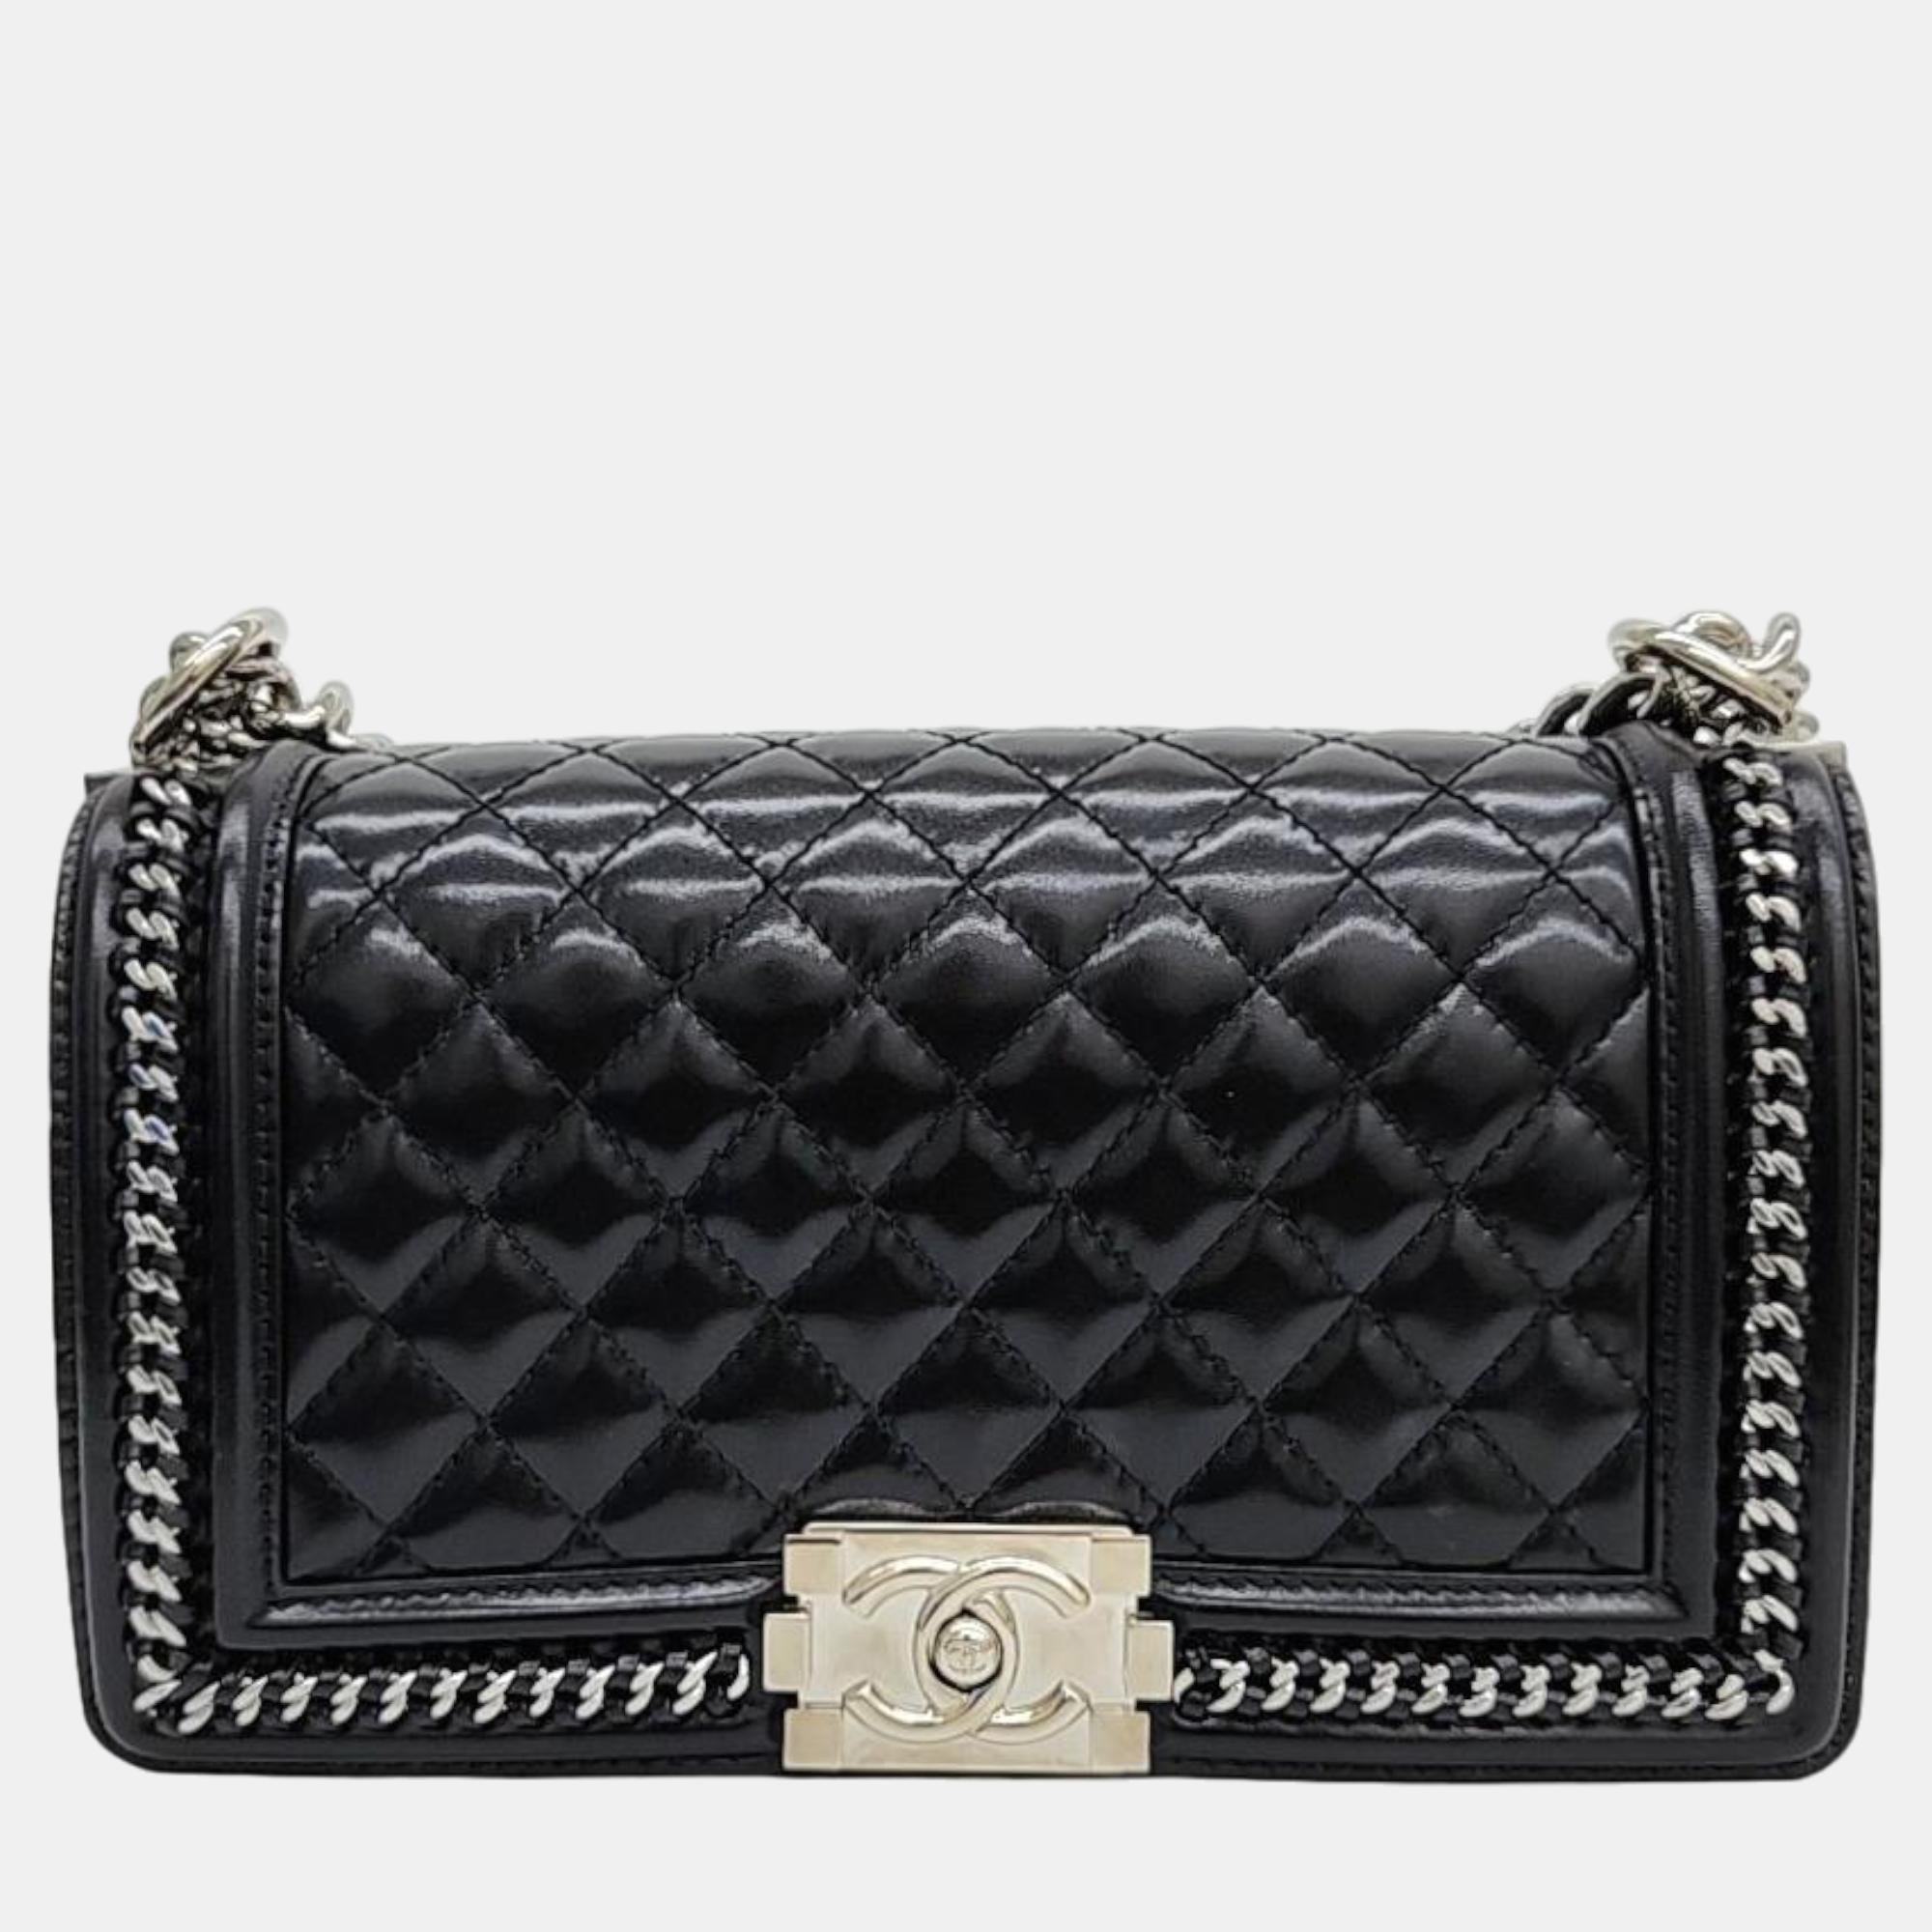 Chanel black patent leather medium boy whipstitch chain shoulder bag